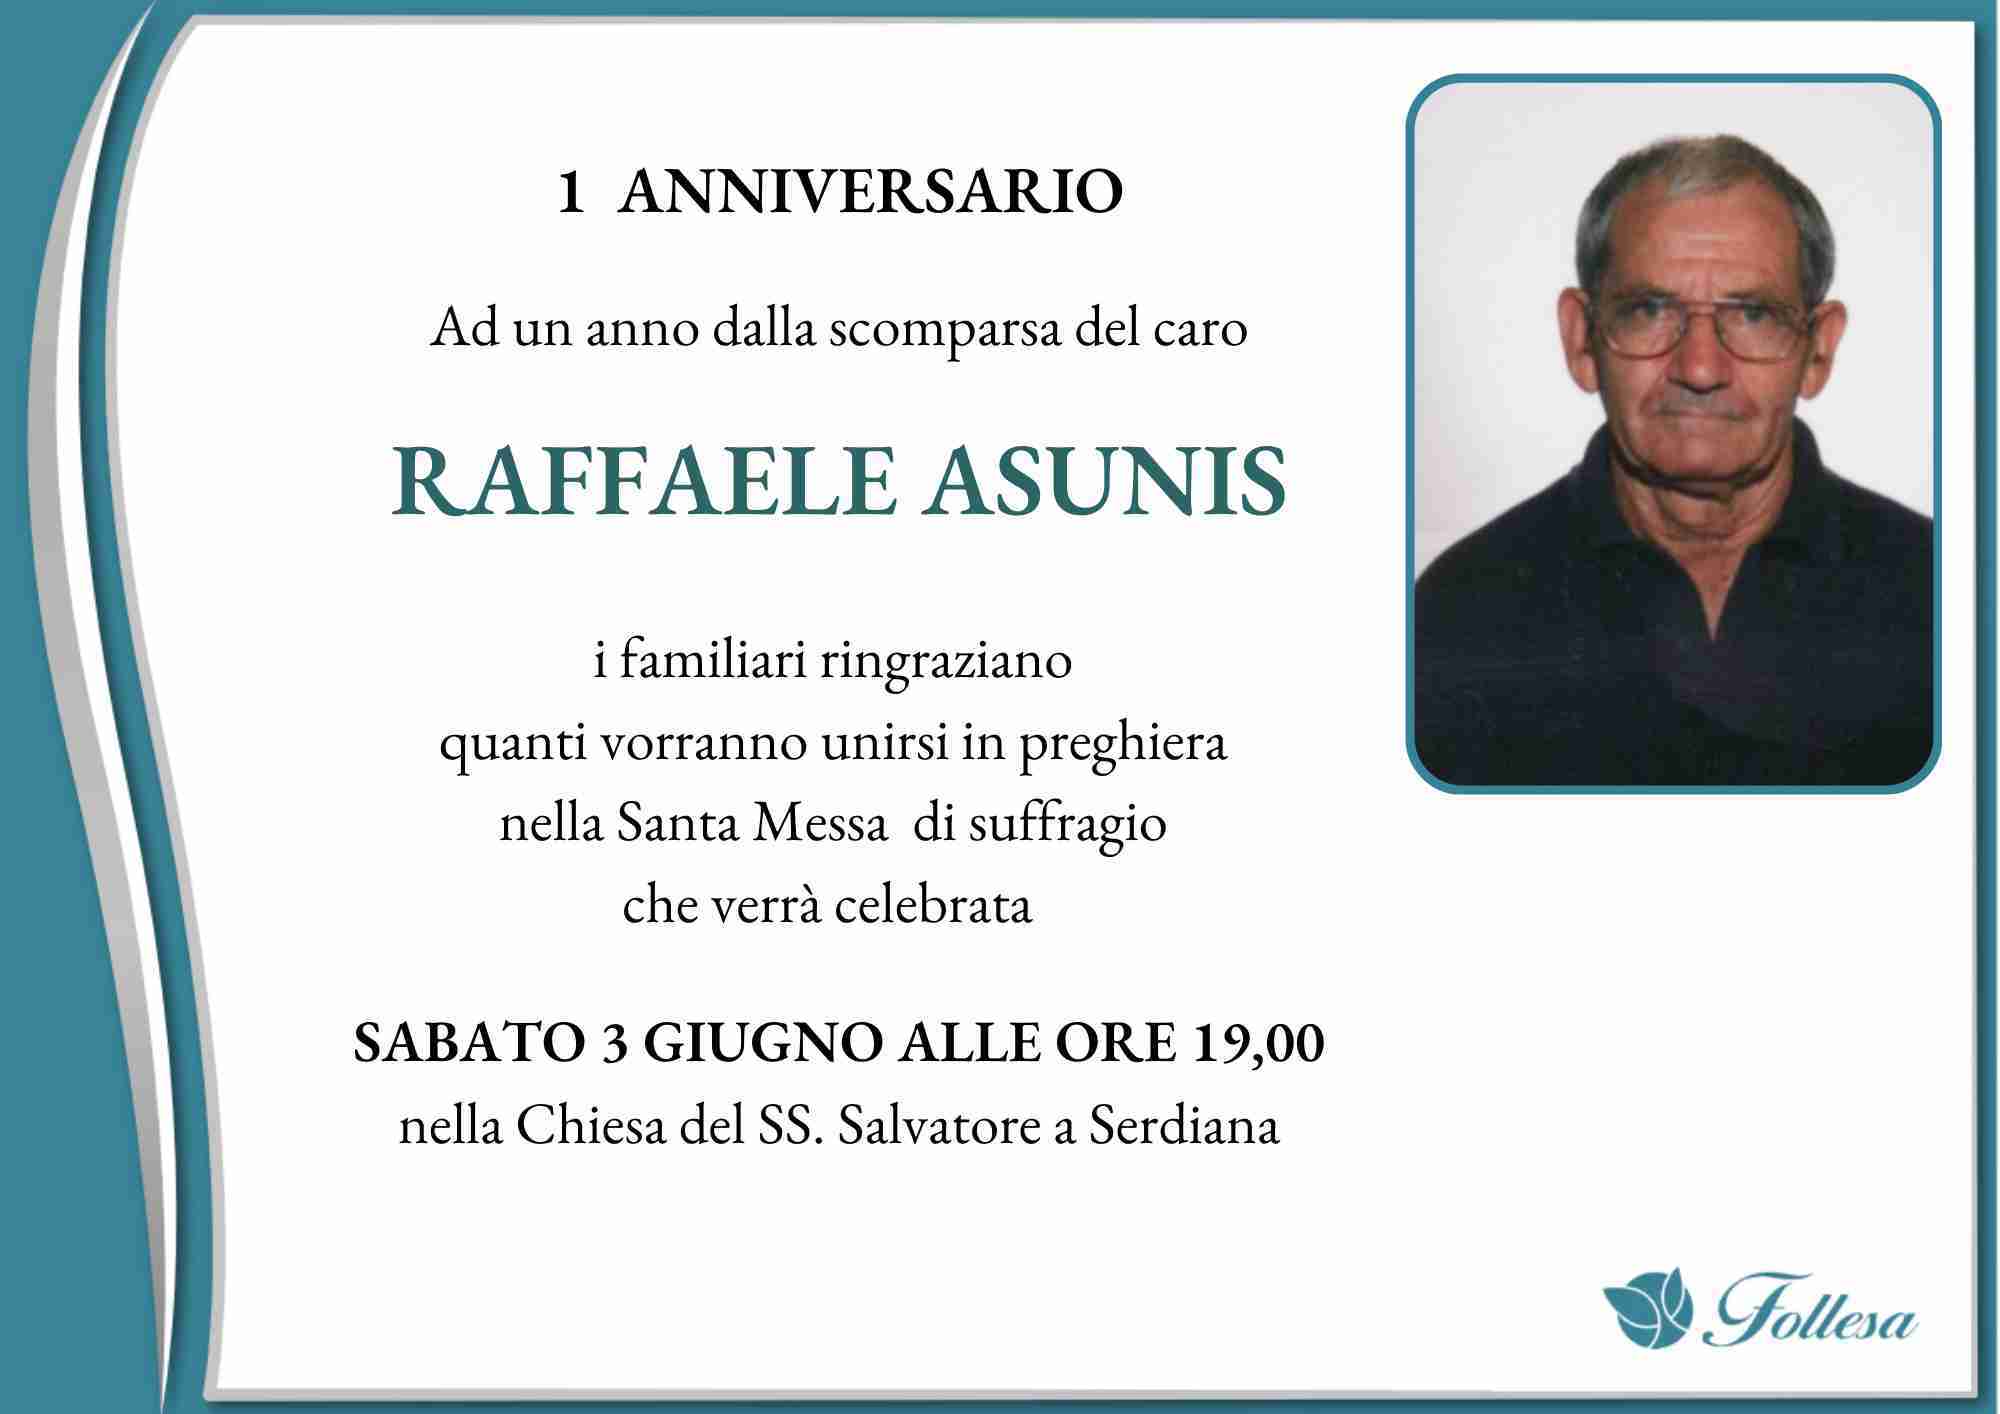 Raffaele Asunis